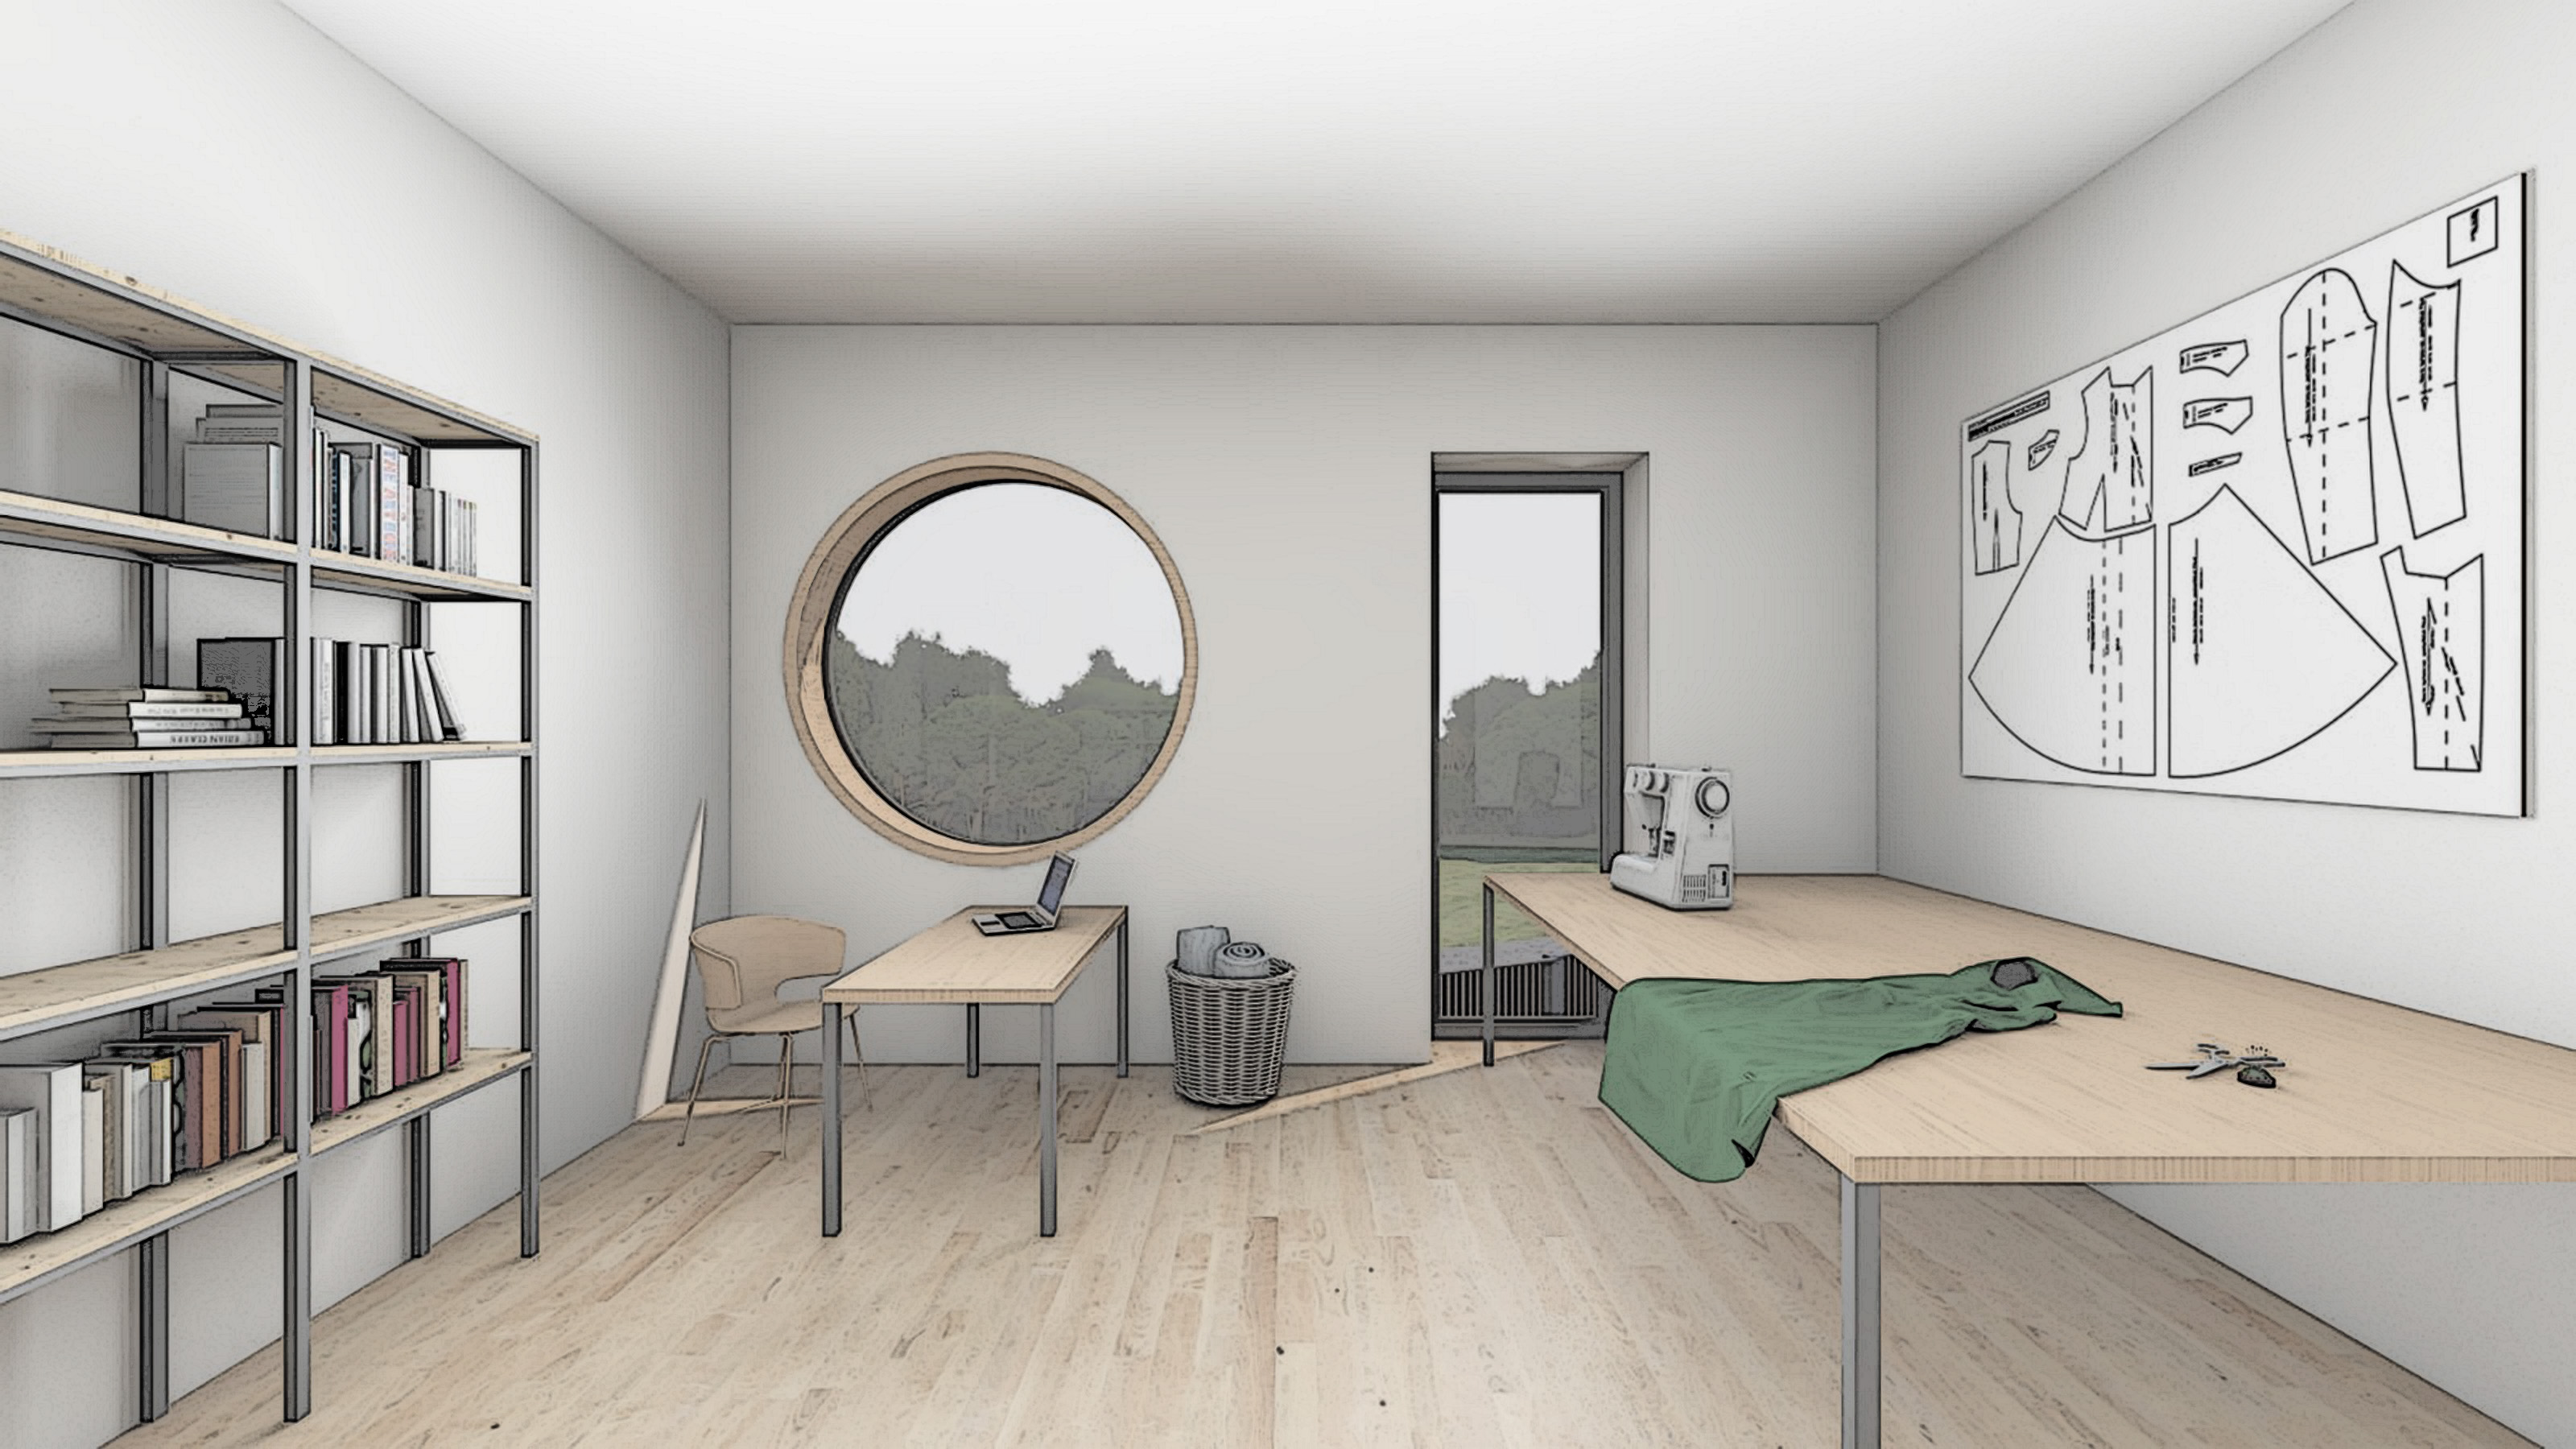 Изображение для проекта Проект особняка в Латвии в стиле модерн 2906